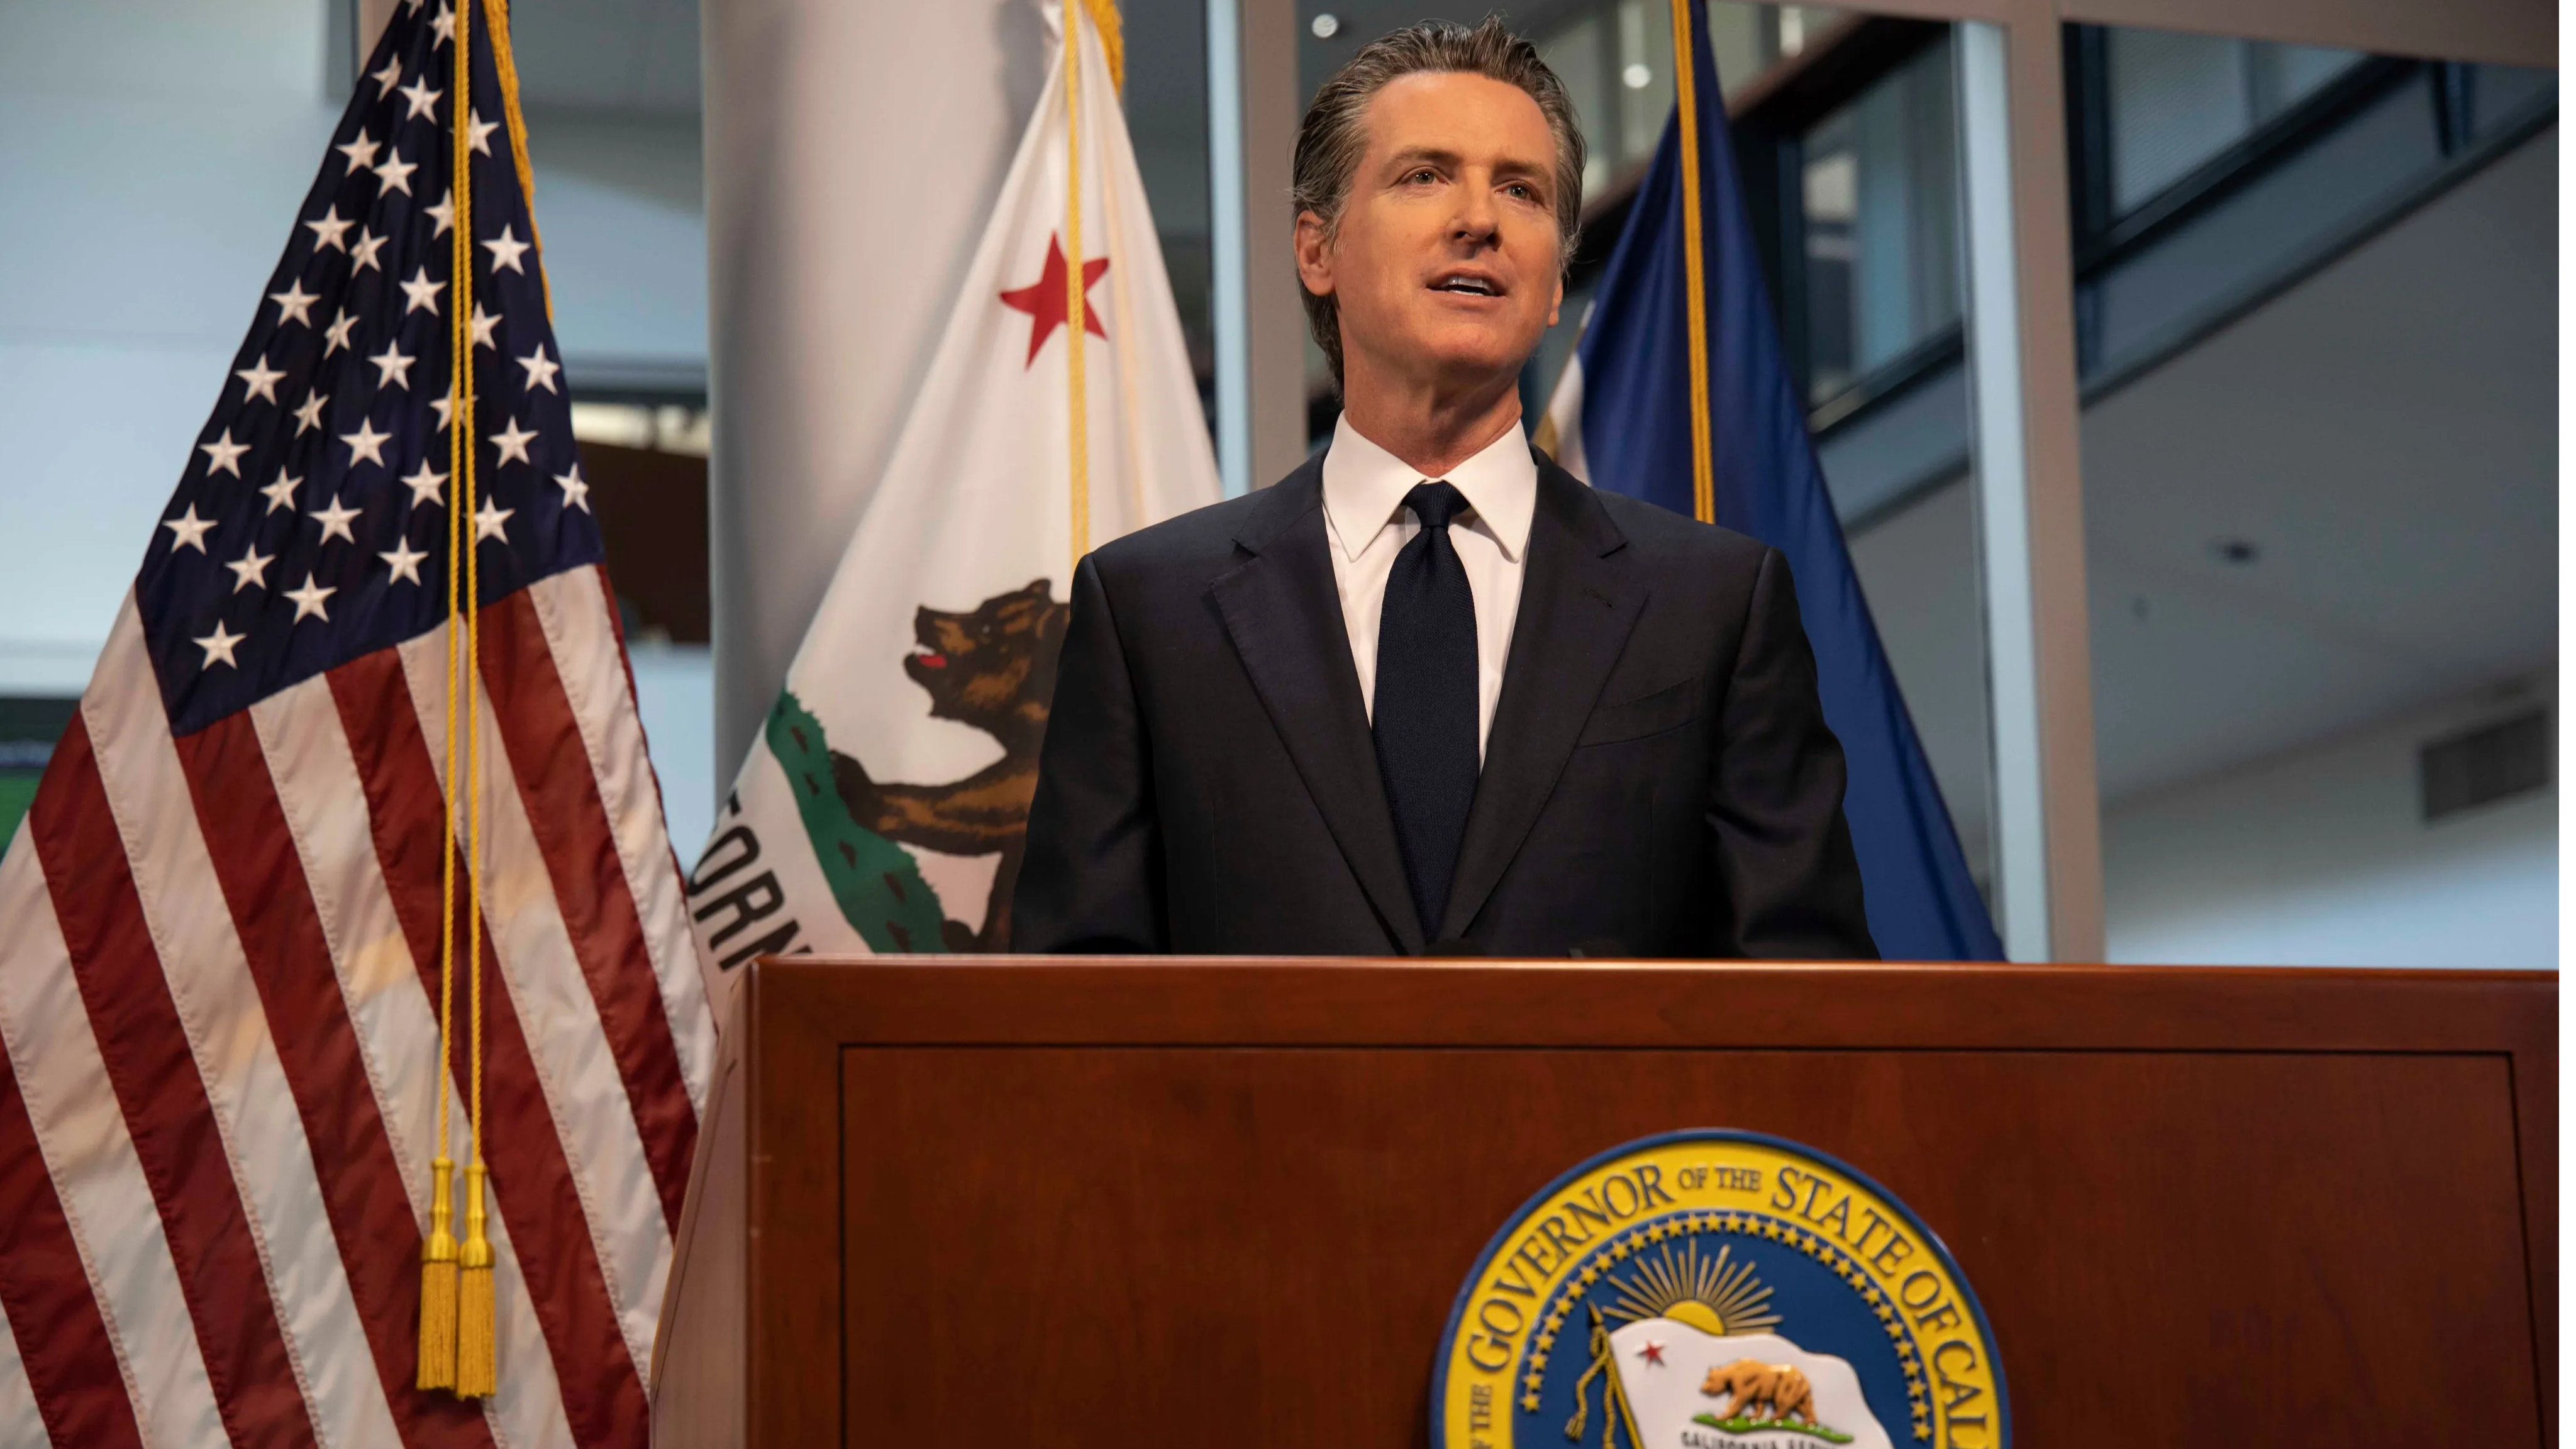 California Governor Gavin Newsom ‘worried’ as bid to recall him gains steam